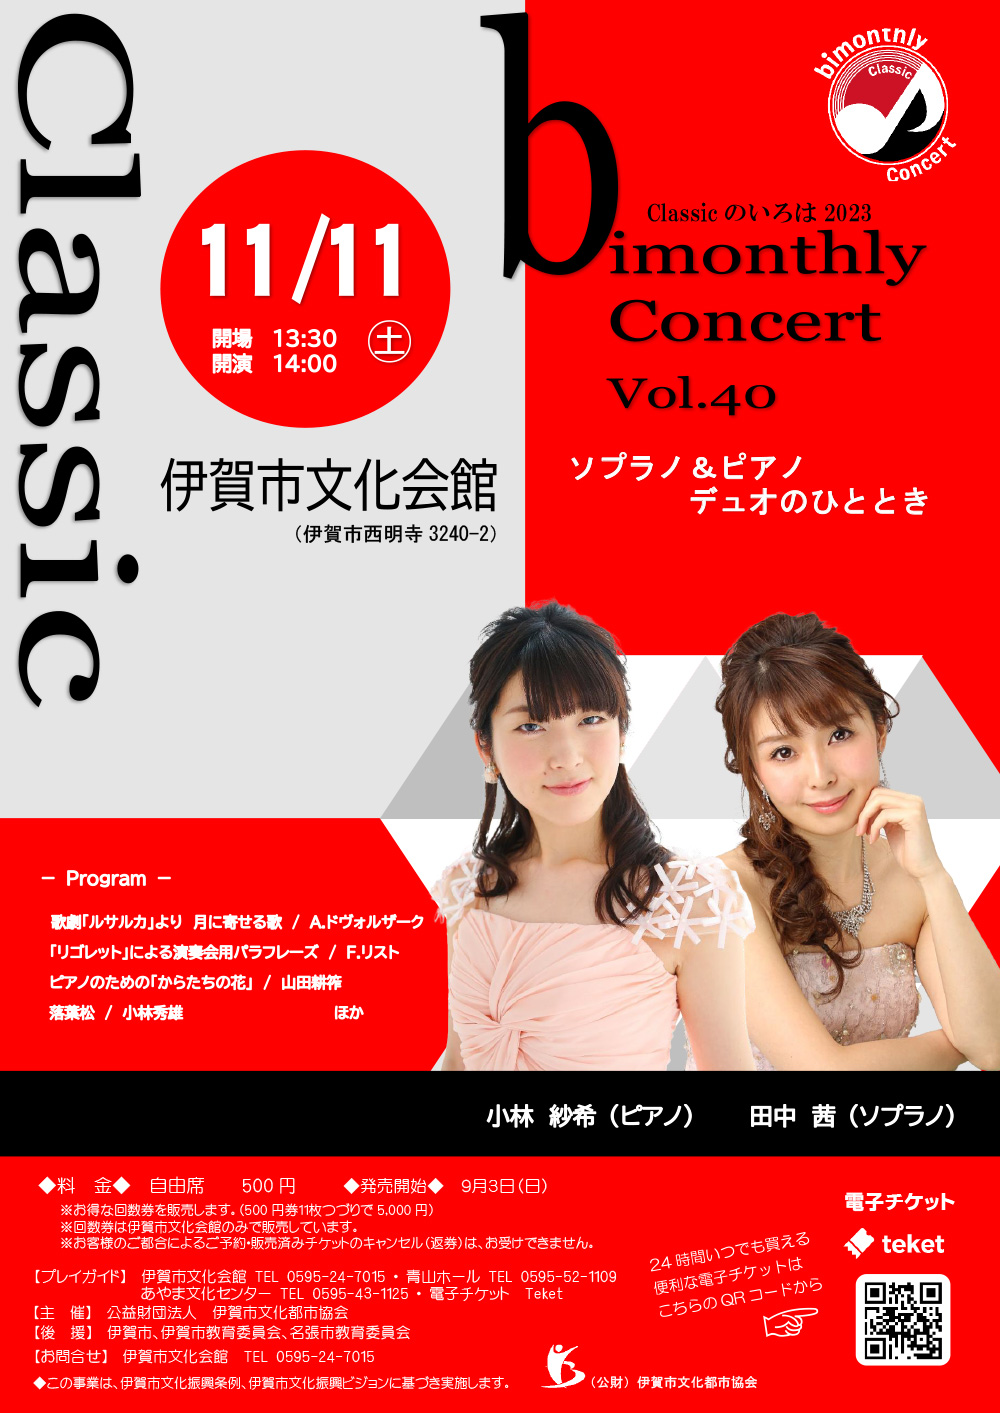 bimonthly Concert Vol.40 ピアノ・ジョイントリサイタル